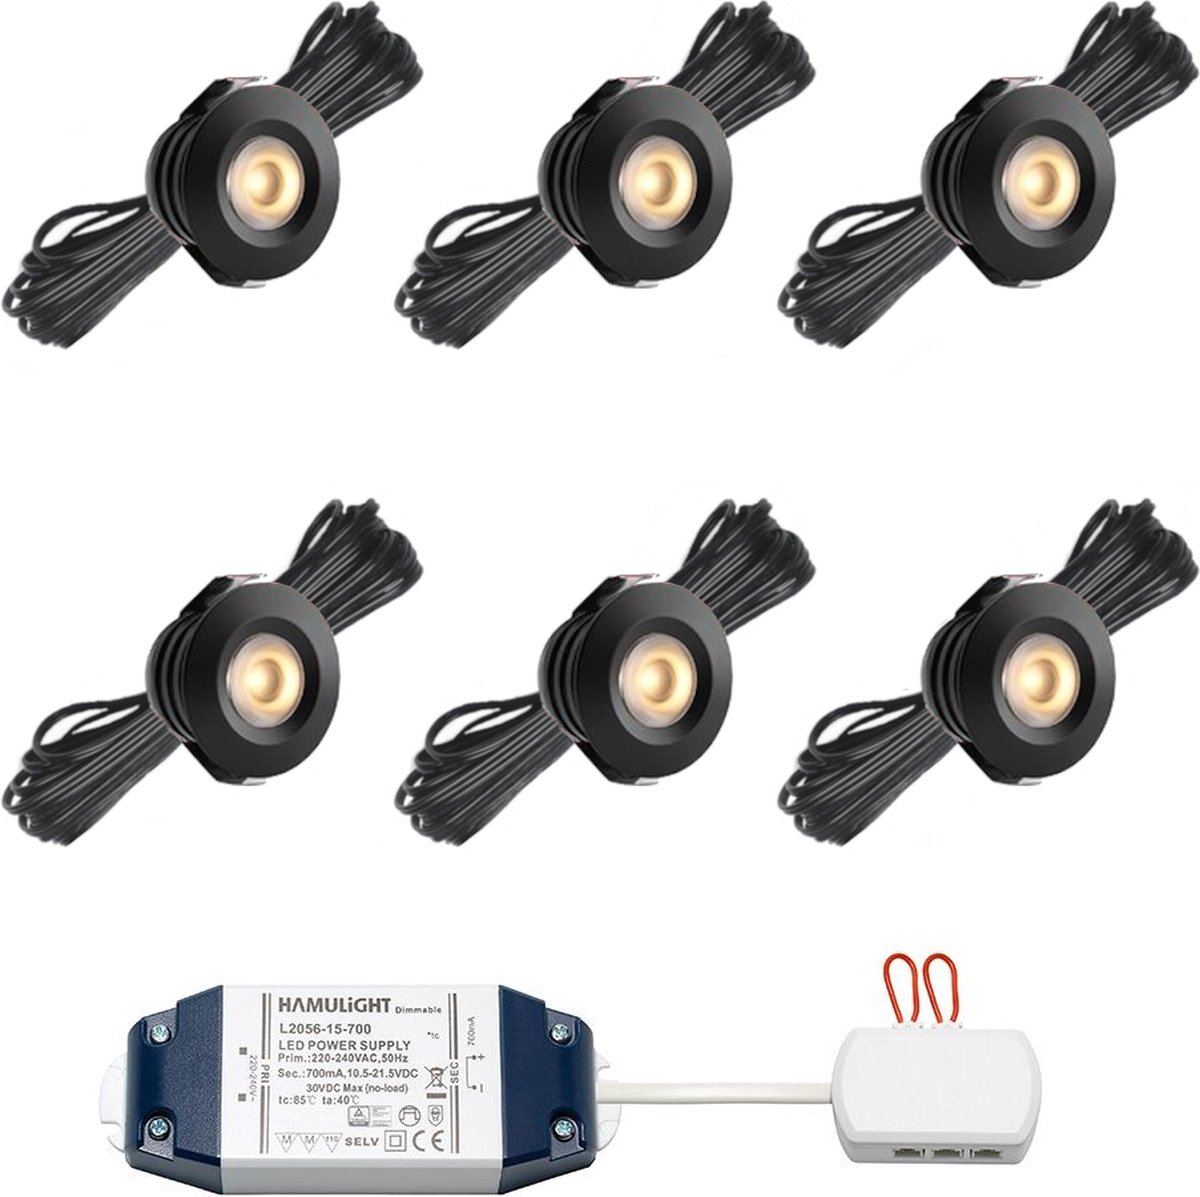 LED inbouwspot Pals bas zwart - inclusief trafo - inbouwspots / downlights / plafondspots / led spot / 3W / dimbaar / warm wit / rond / 230V / IP44 / - set van 6 stuks